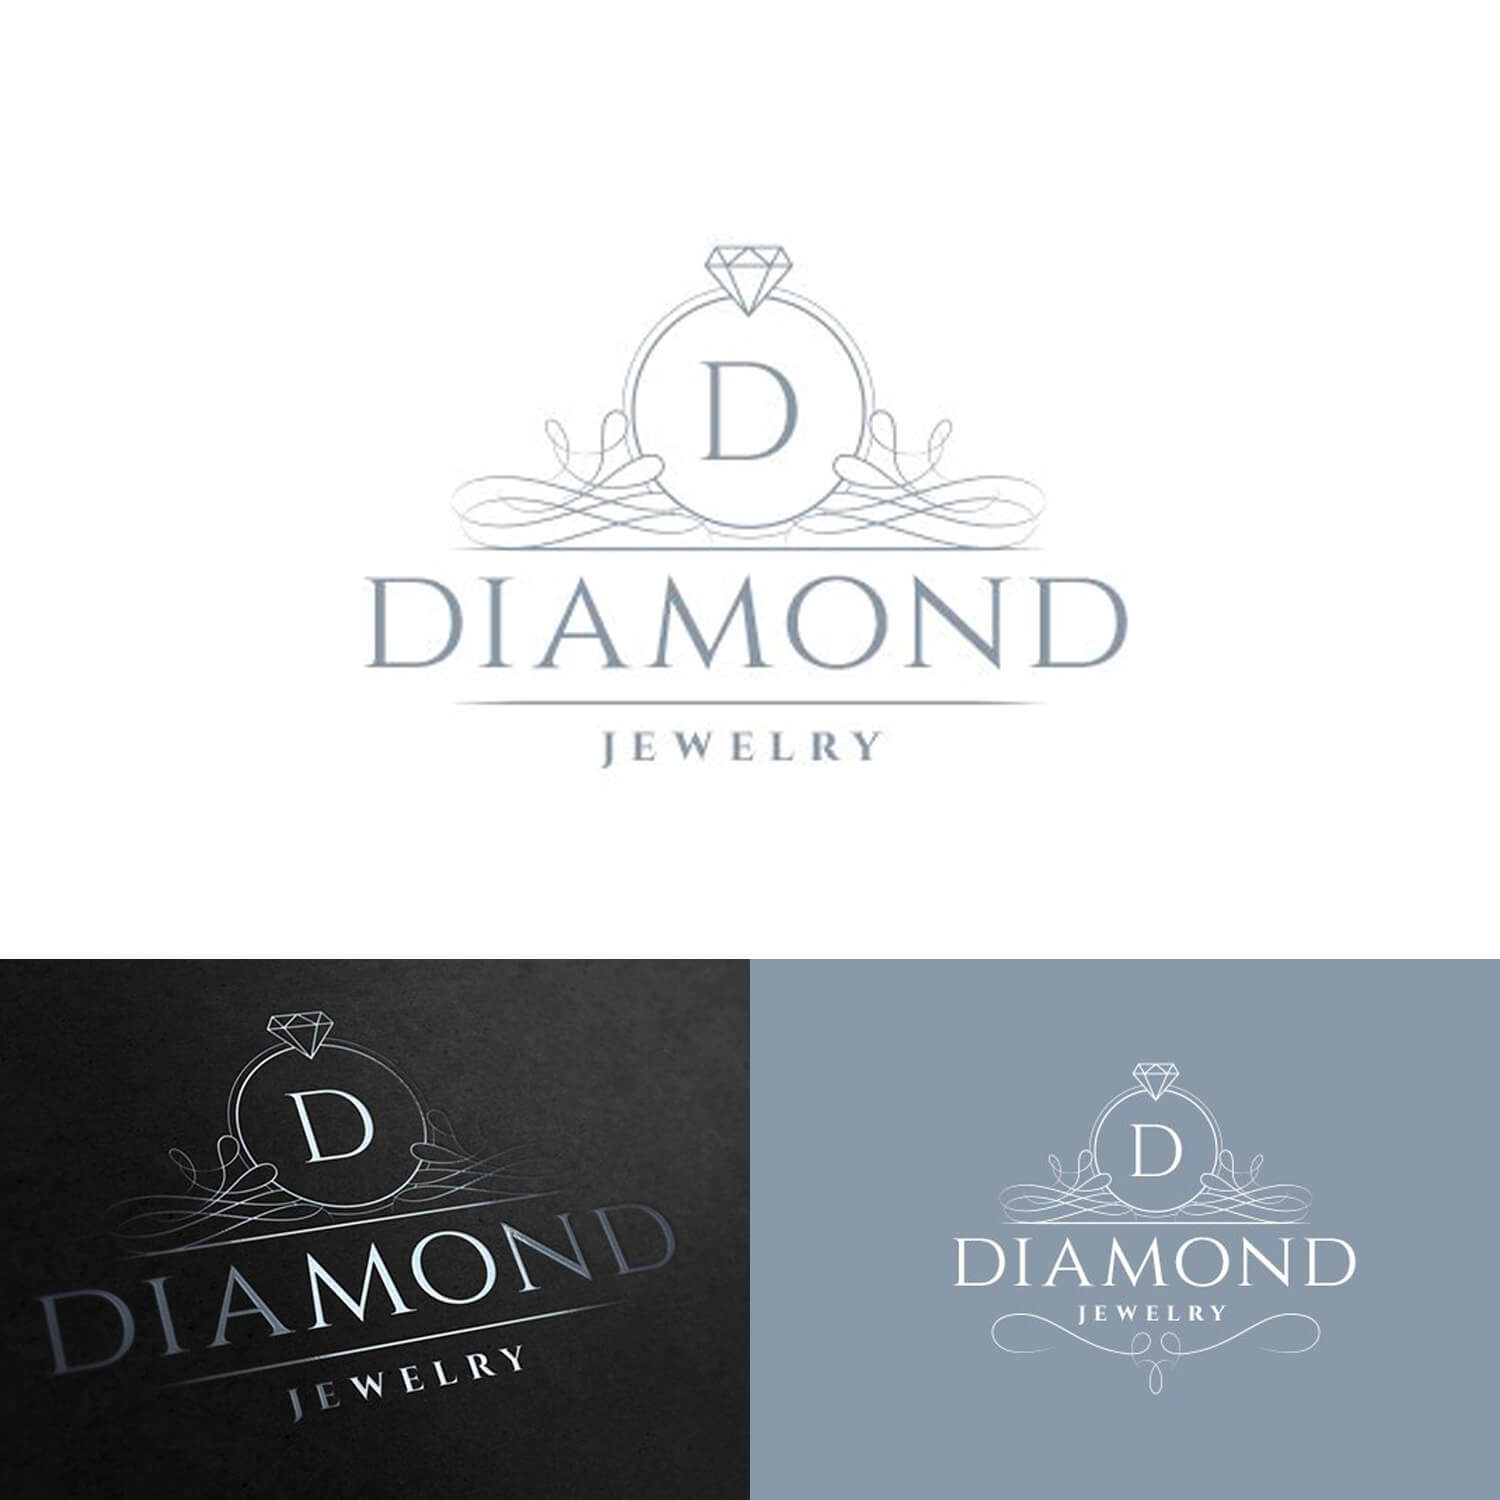 Diamond jewelry logo in three colors, white, black, blue.